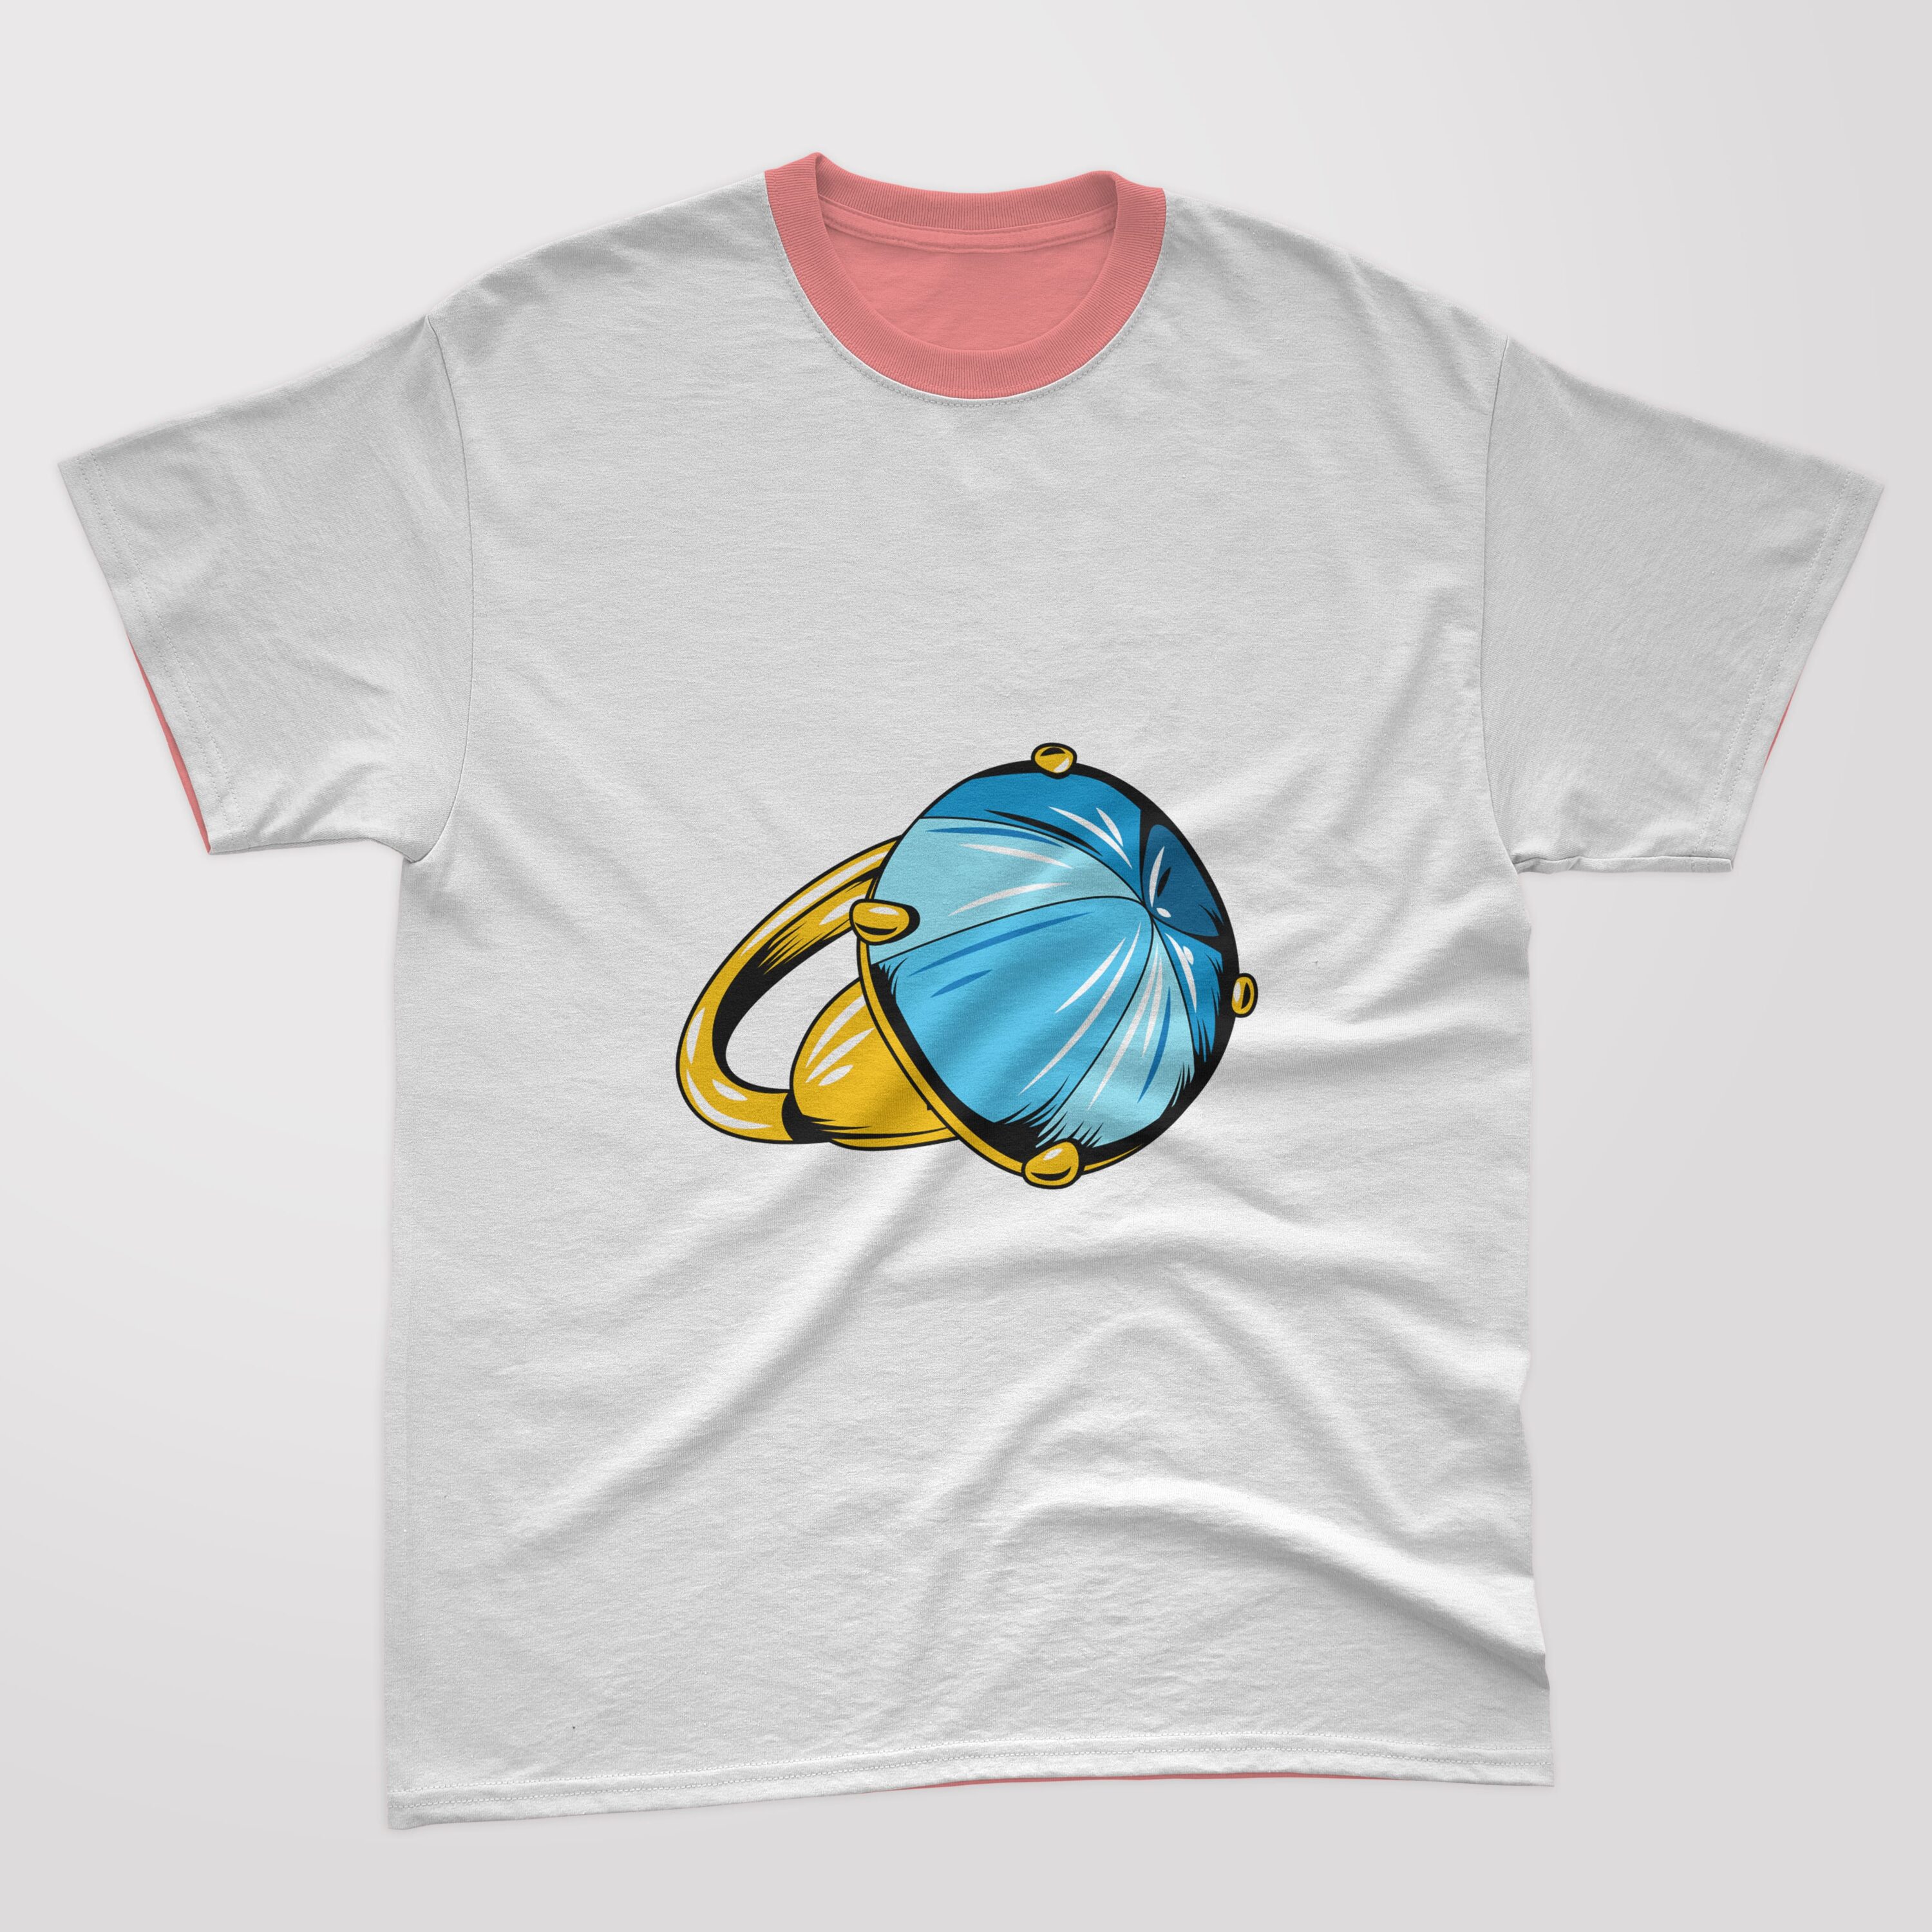 Image of T-shirt with amazing diamond ring print.